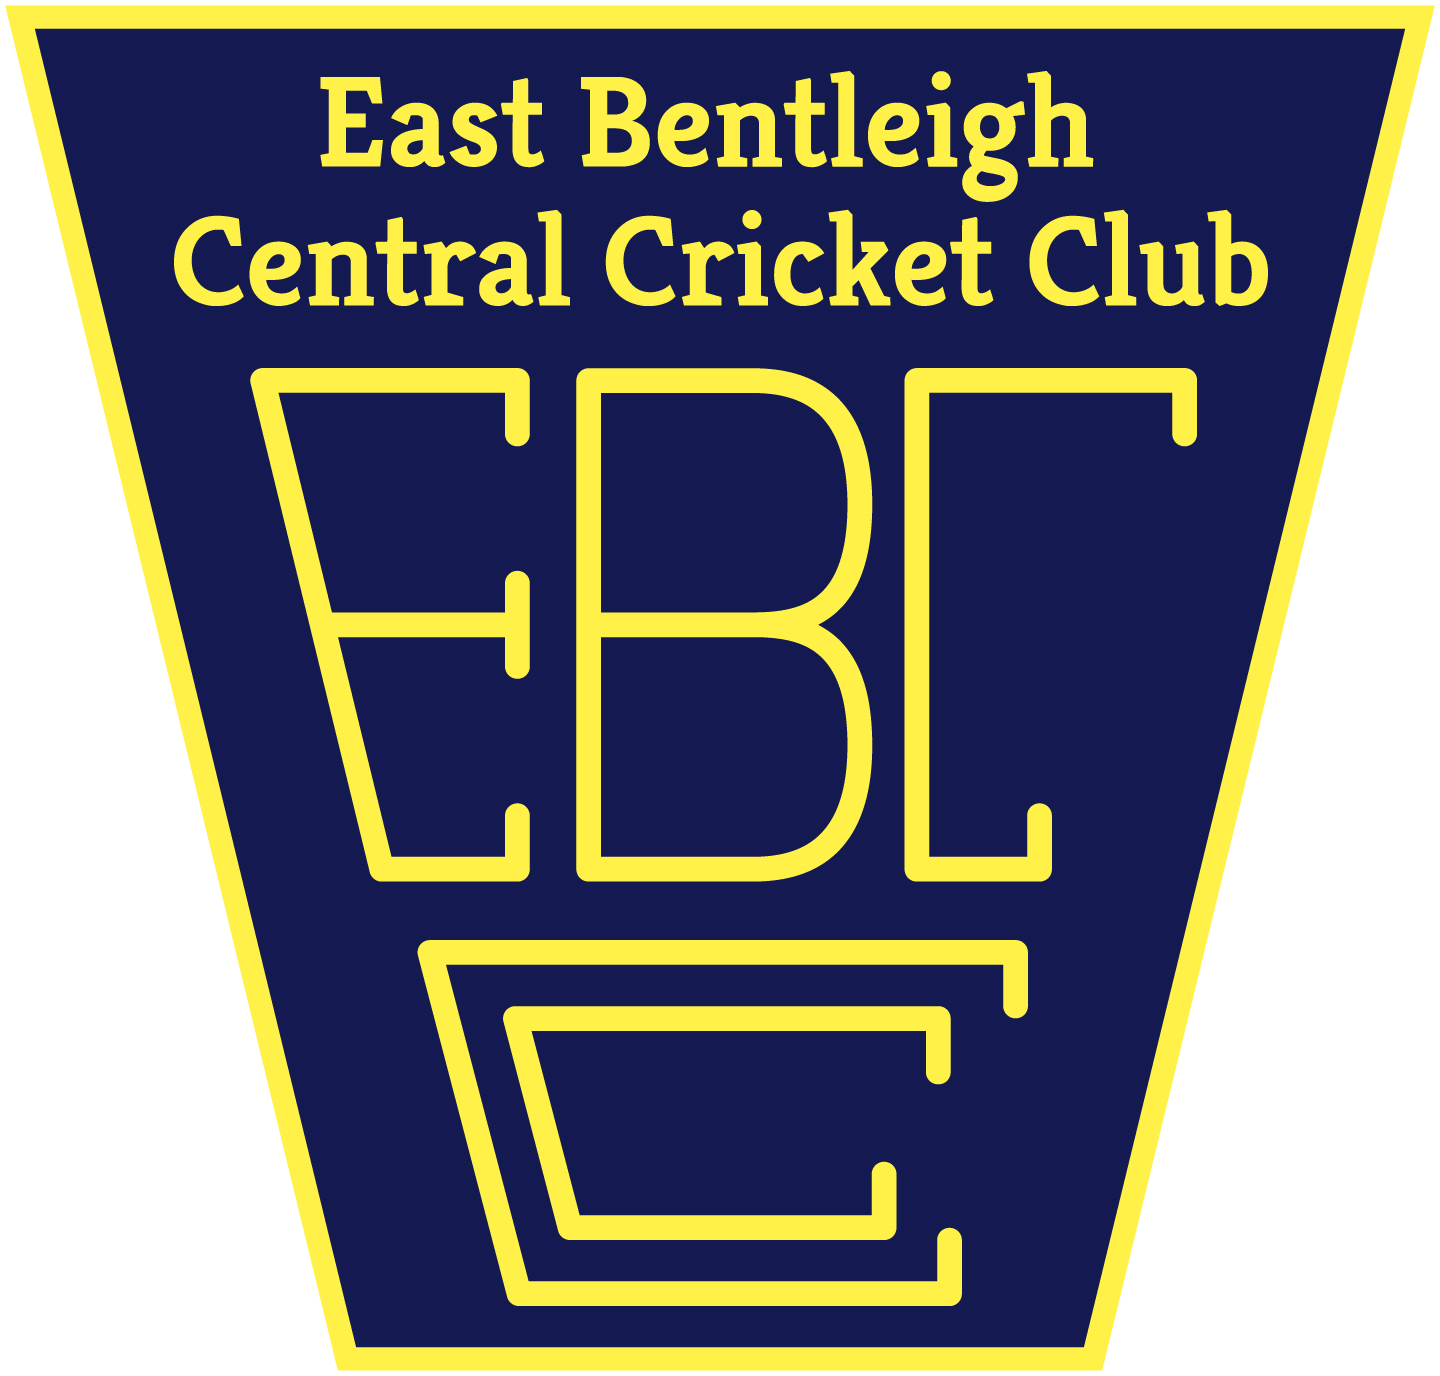 East Bentleigh Central Cricket Club